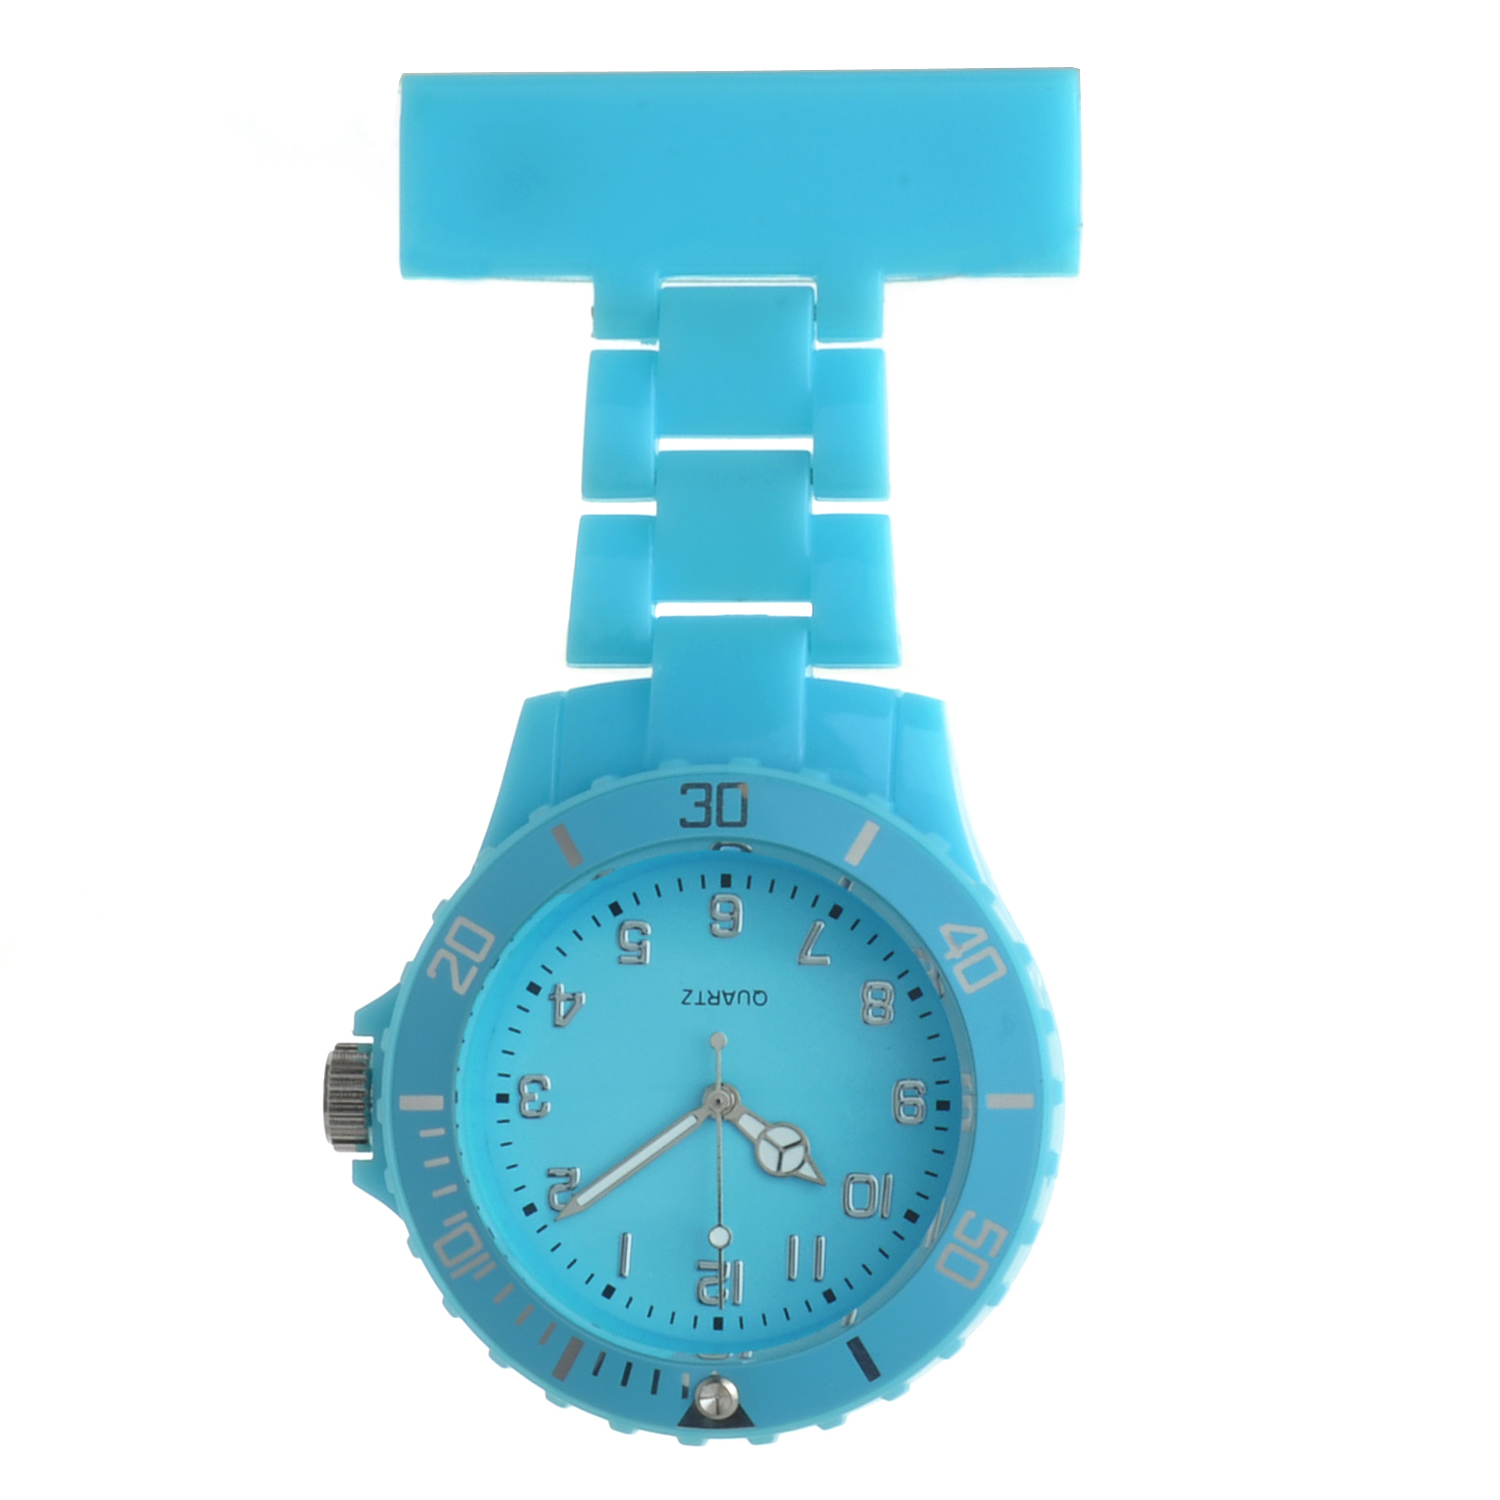 Plastic neon nursing watch NS2102- Turquoise